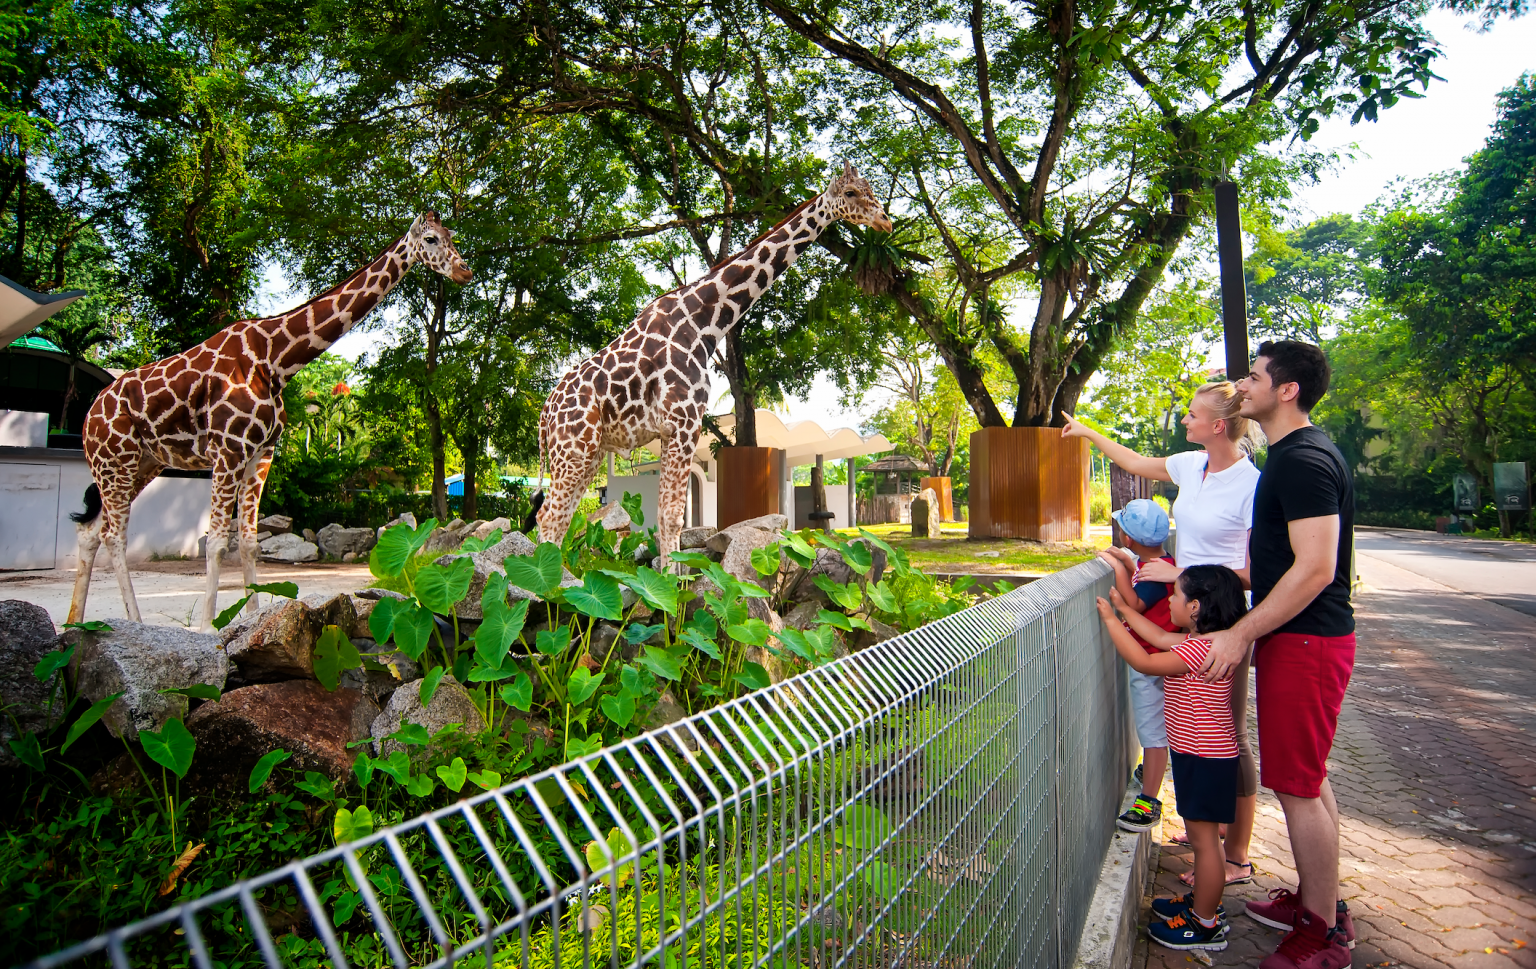 Зоопарка скачает телефон. Зоопарк Куала-Лумпур, Малайзия. Зоопарк Куала Лумпур. Винперл парк зоопарк. Куала Лумпур зоопарк носороги.